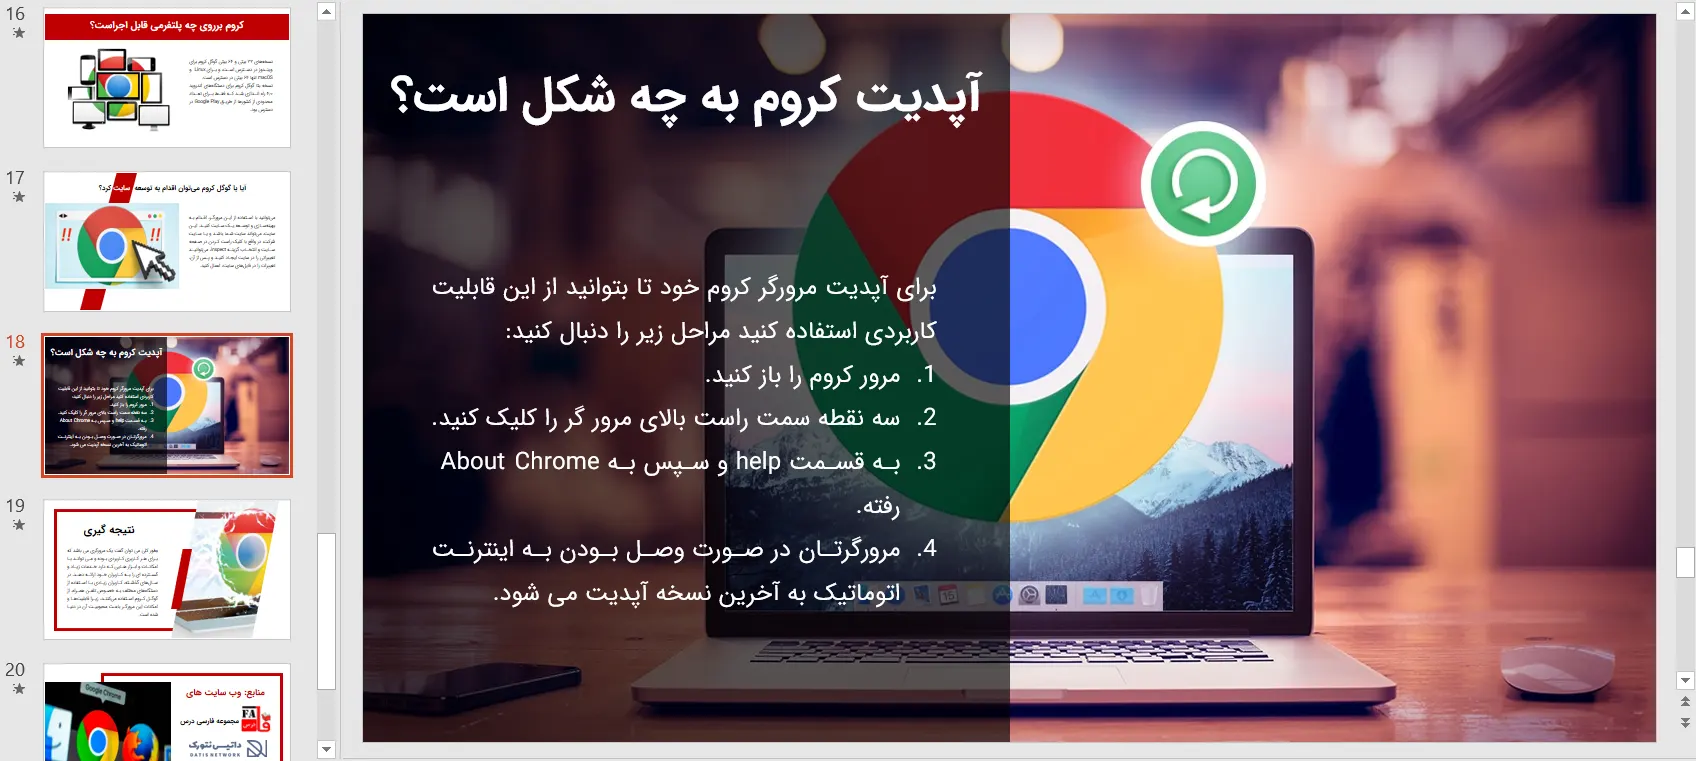 پاورپوینت گوگل کروم - Google Chrome